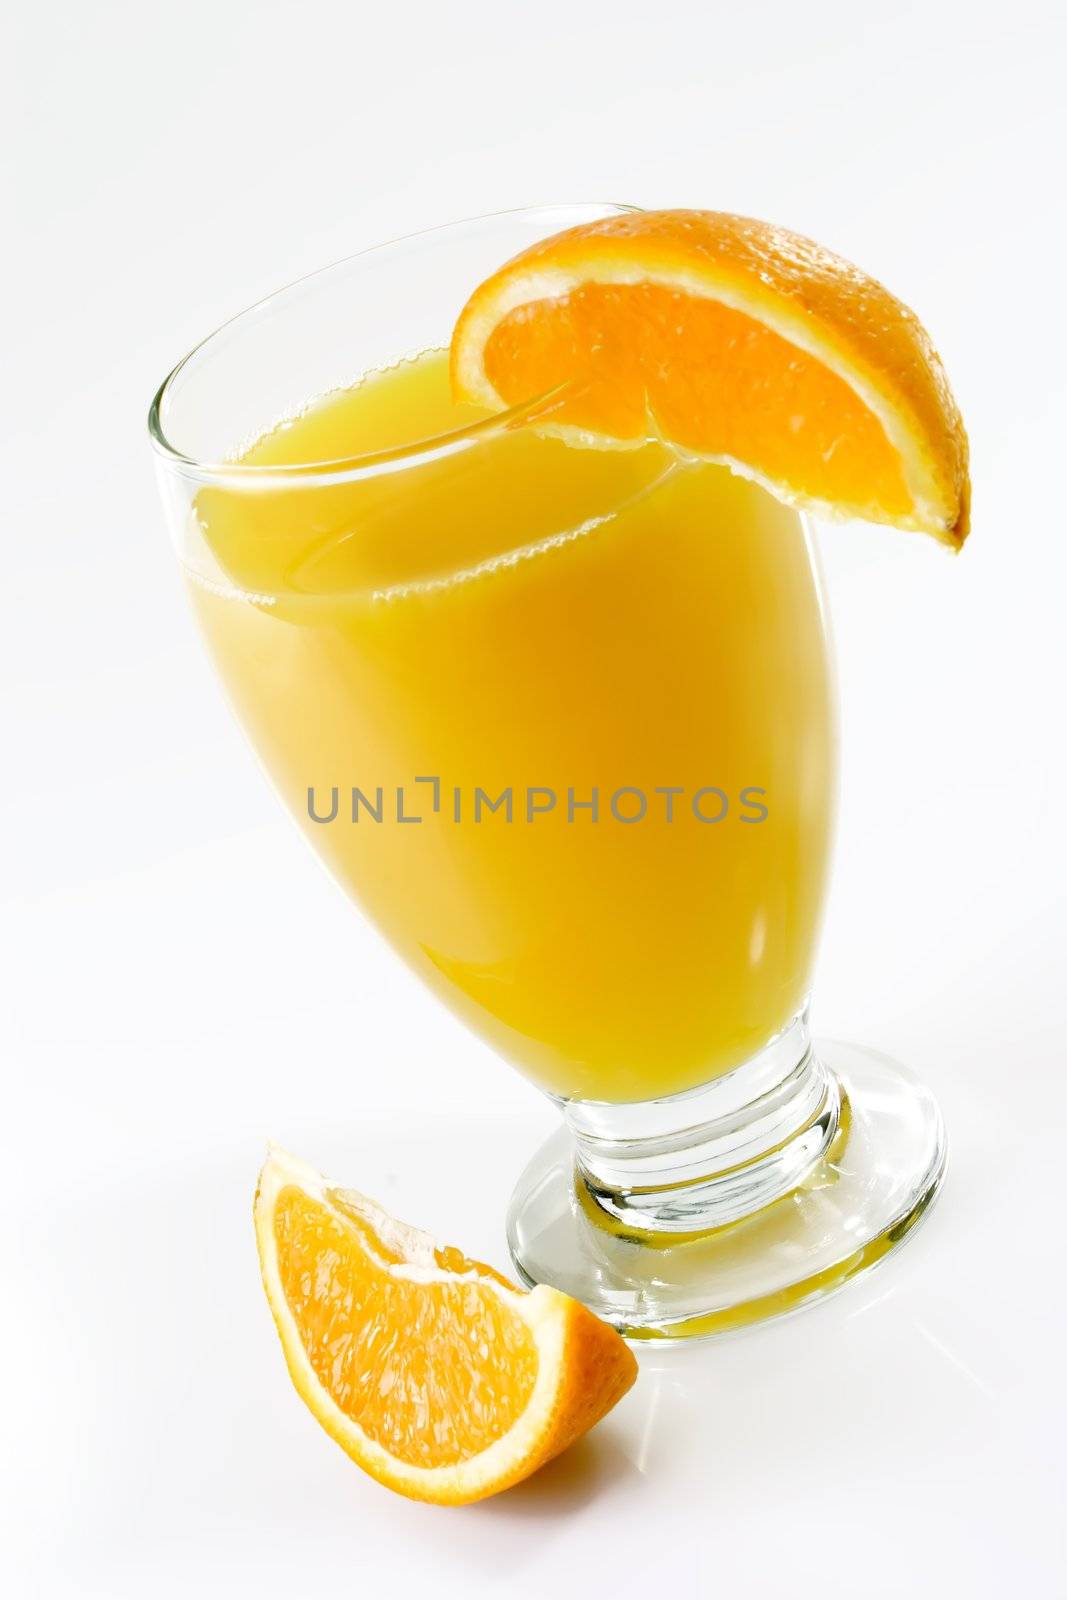 Glass of orange juice with garnish on light background